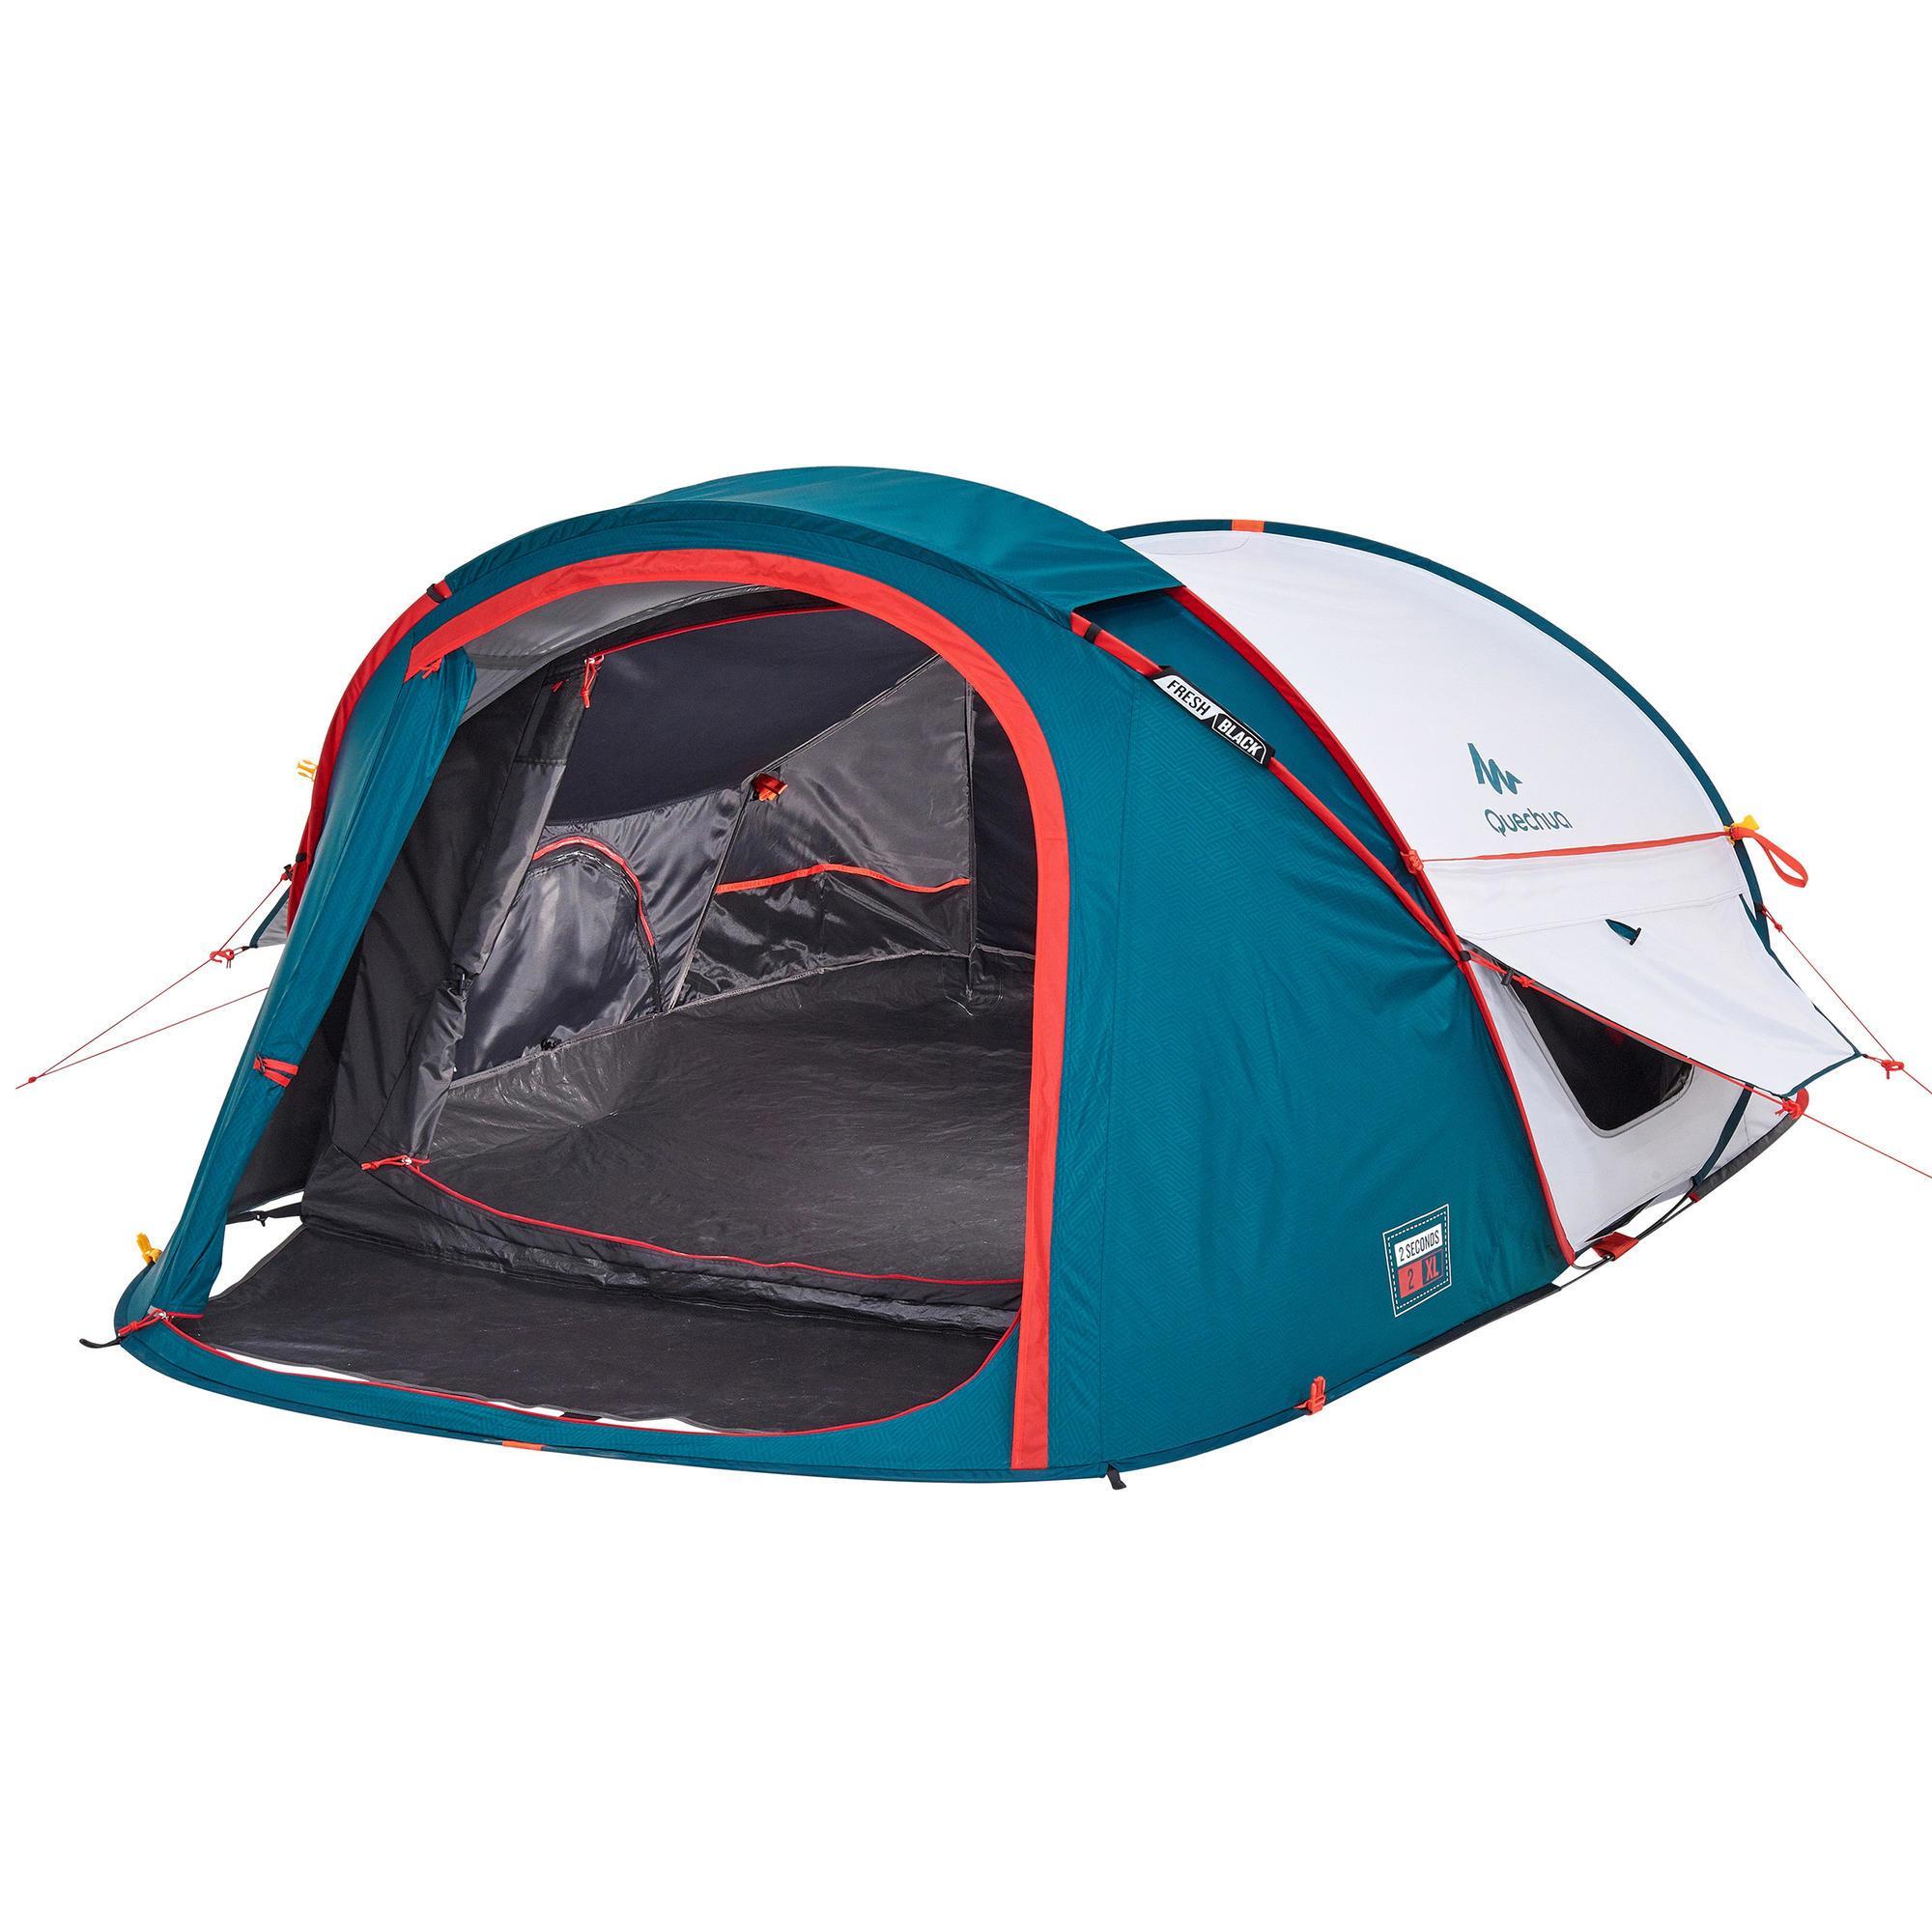 Cort camping 2 SECONDS XL FRESH&BLACK 2 persoane decathlon.ro